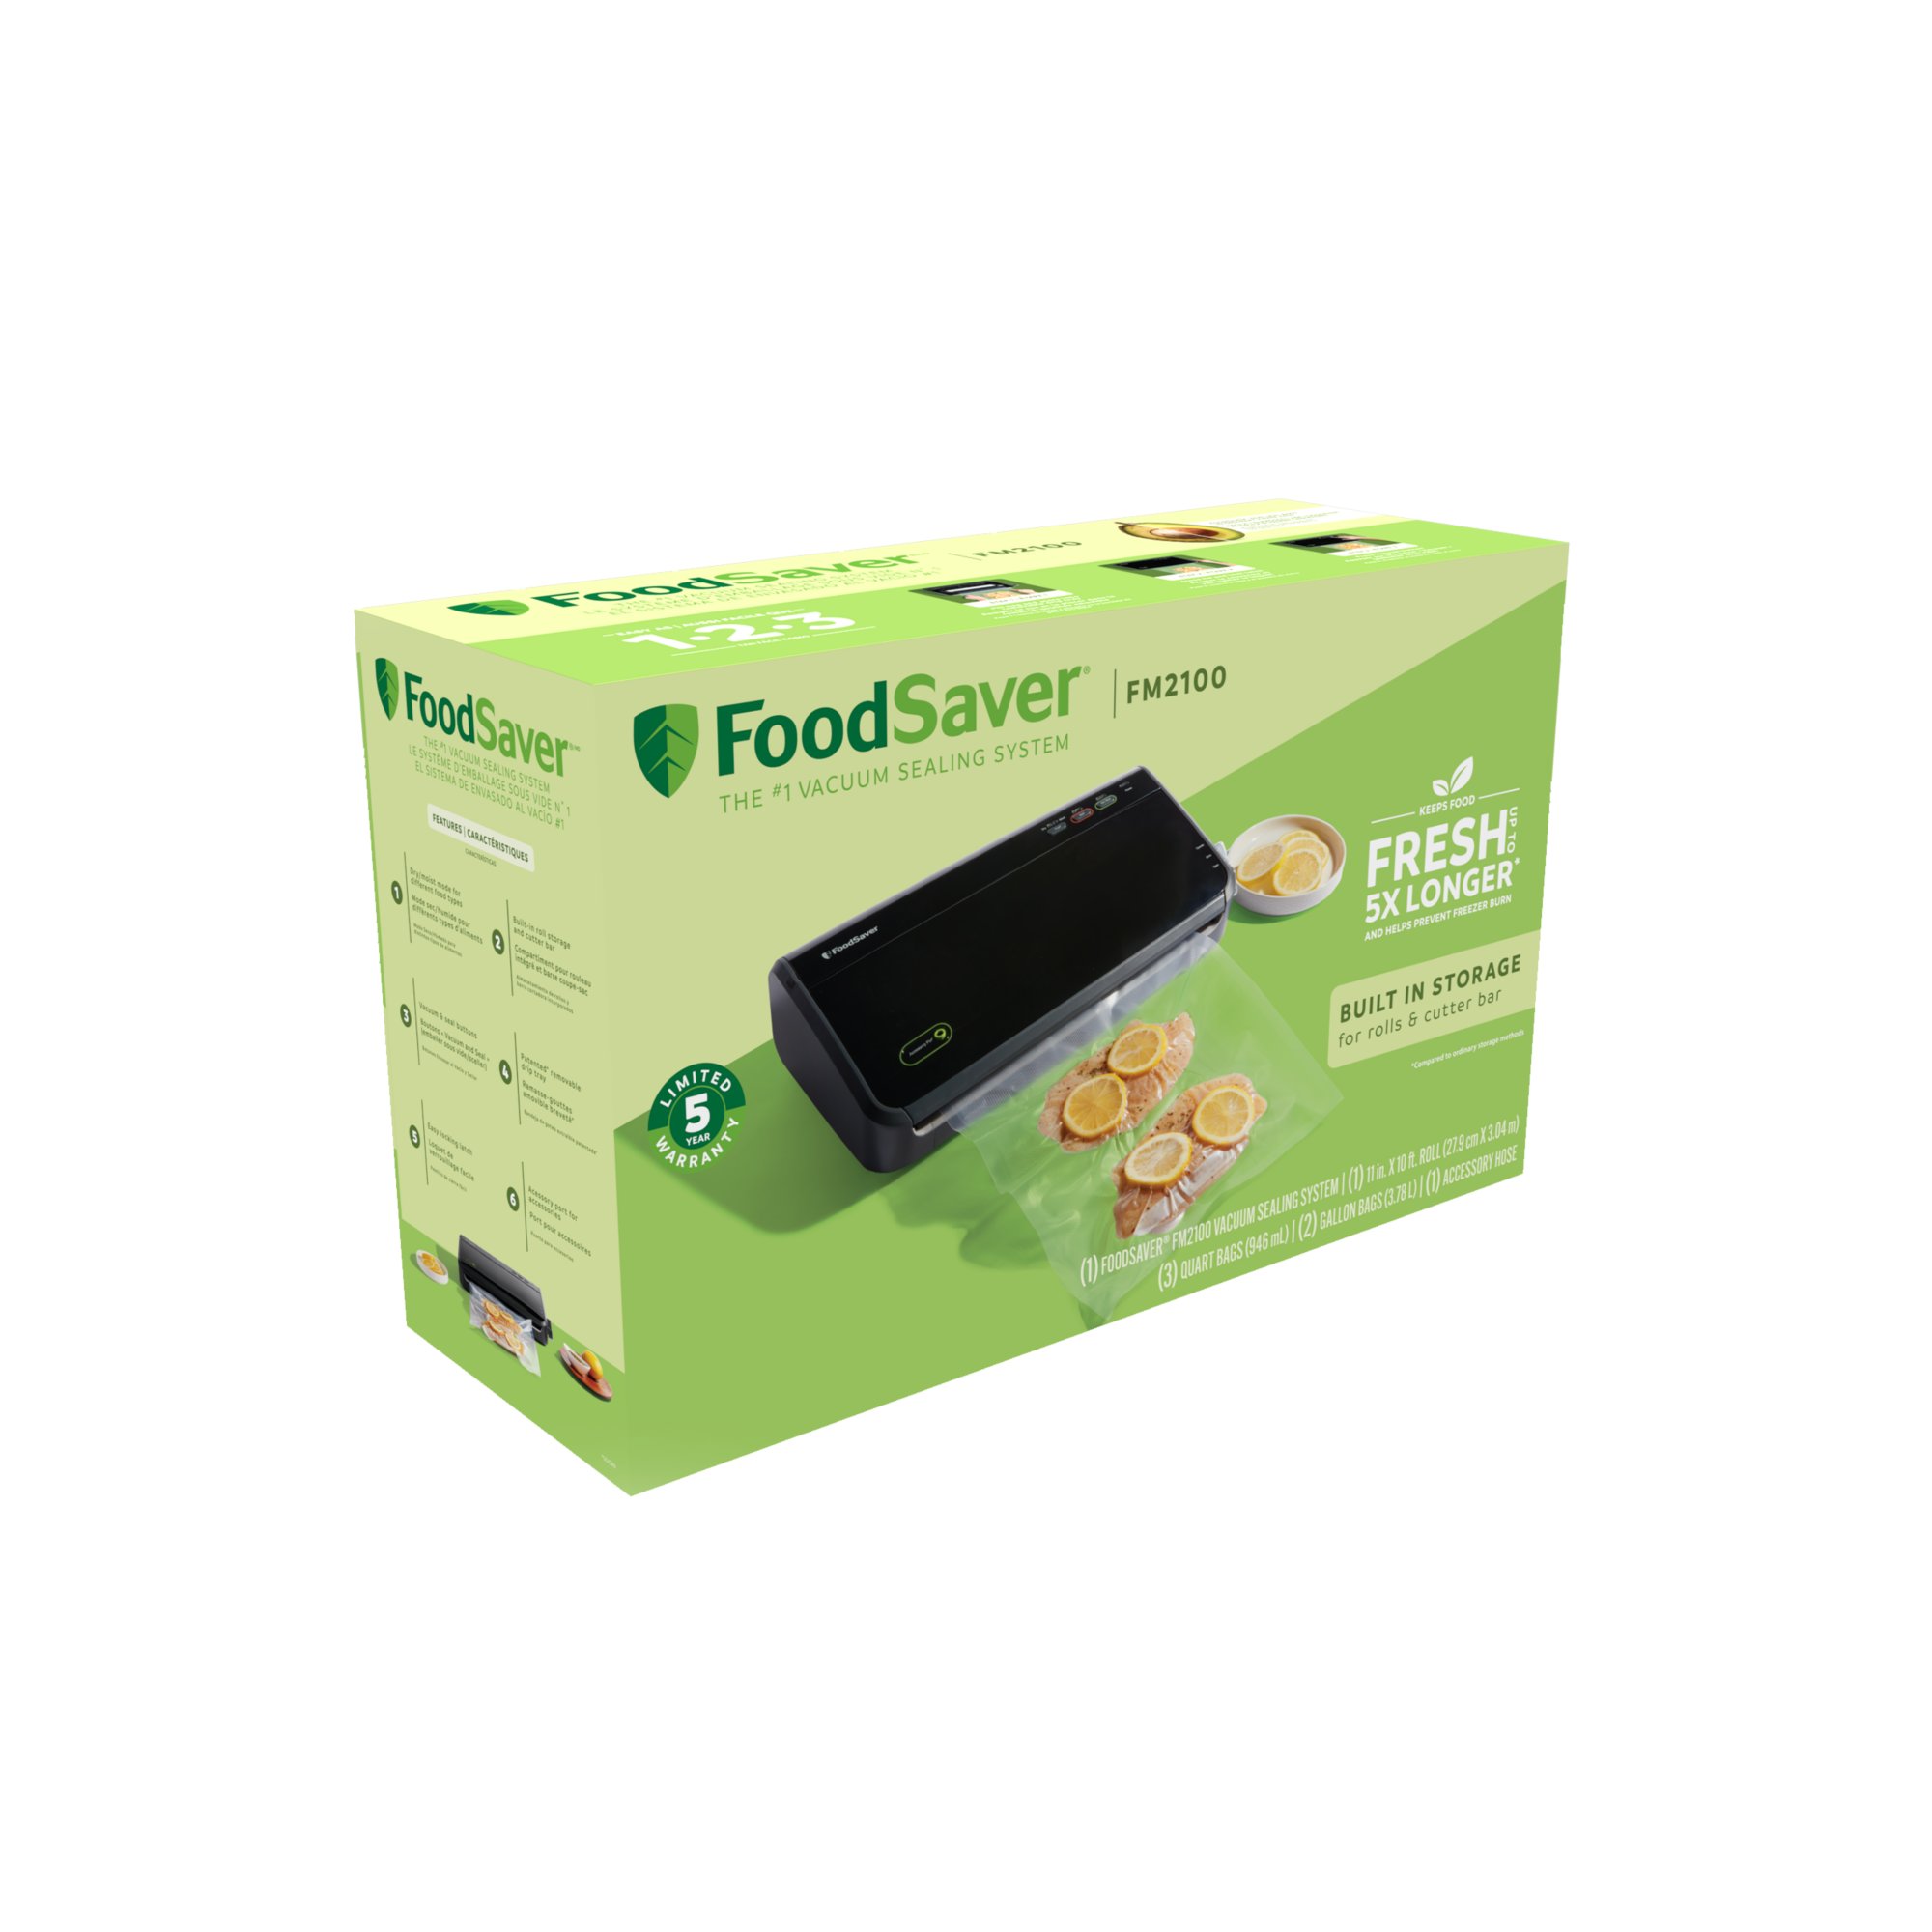 The FoodSaver® FM2100 Vacuum Sealing System | Foodsaver